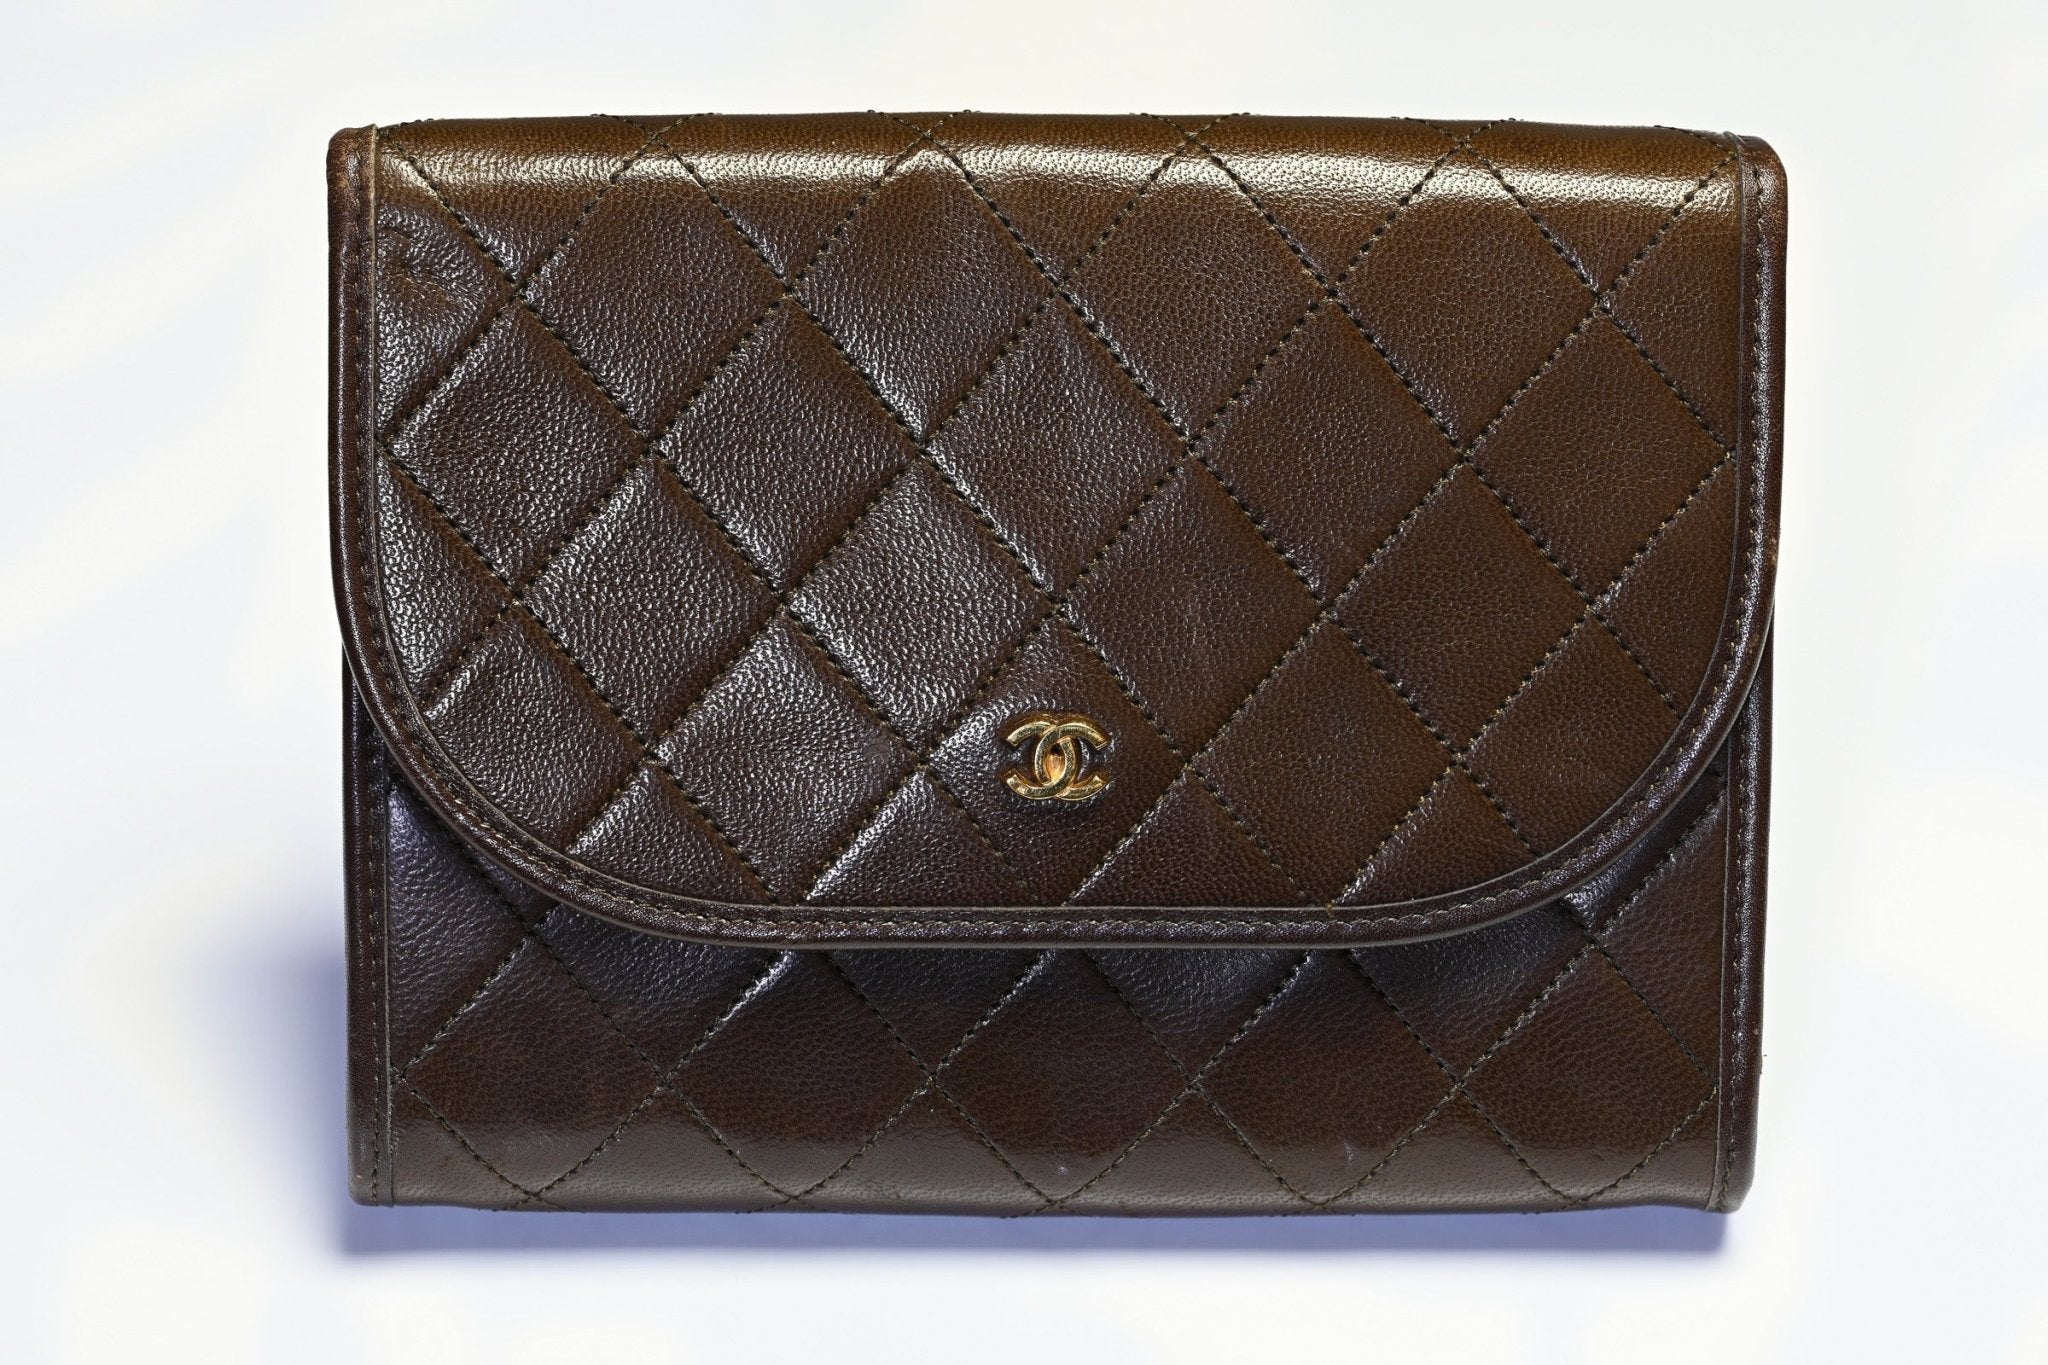 Vintage Chanel Paris Brown Quilted Leather CC Mini Flap Clutch Crossbody Bag